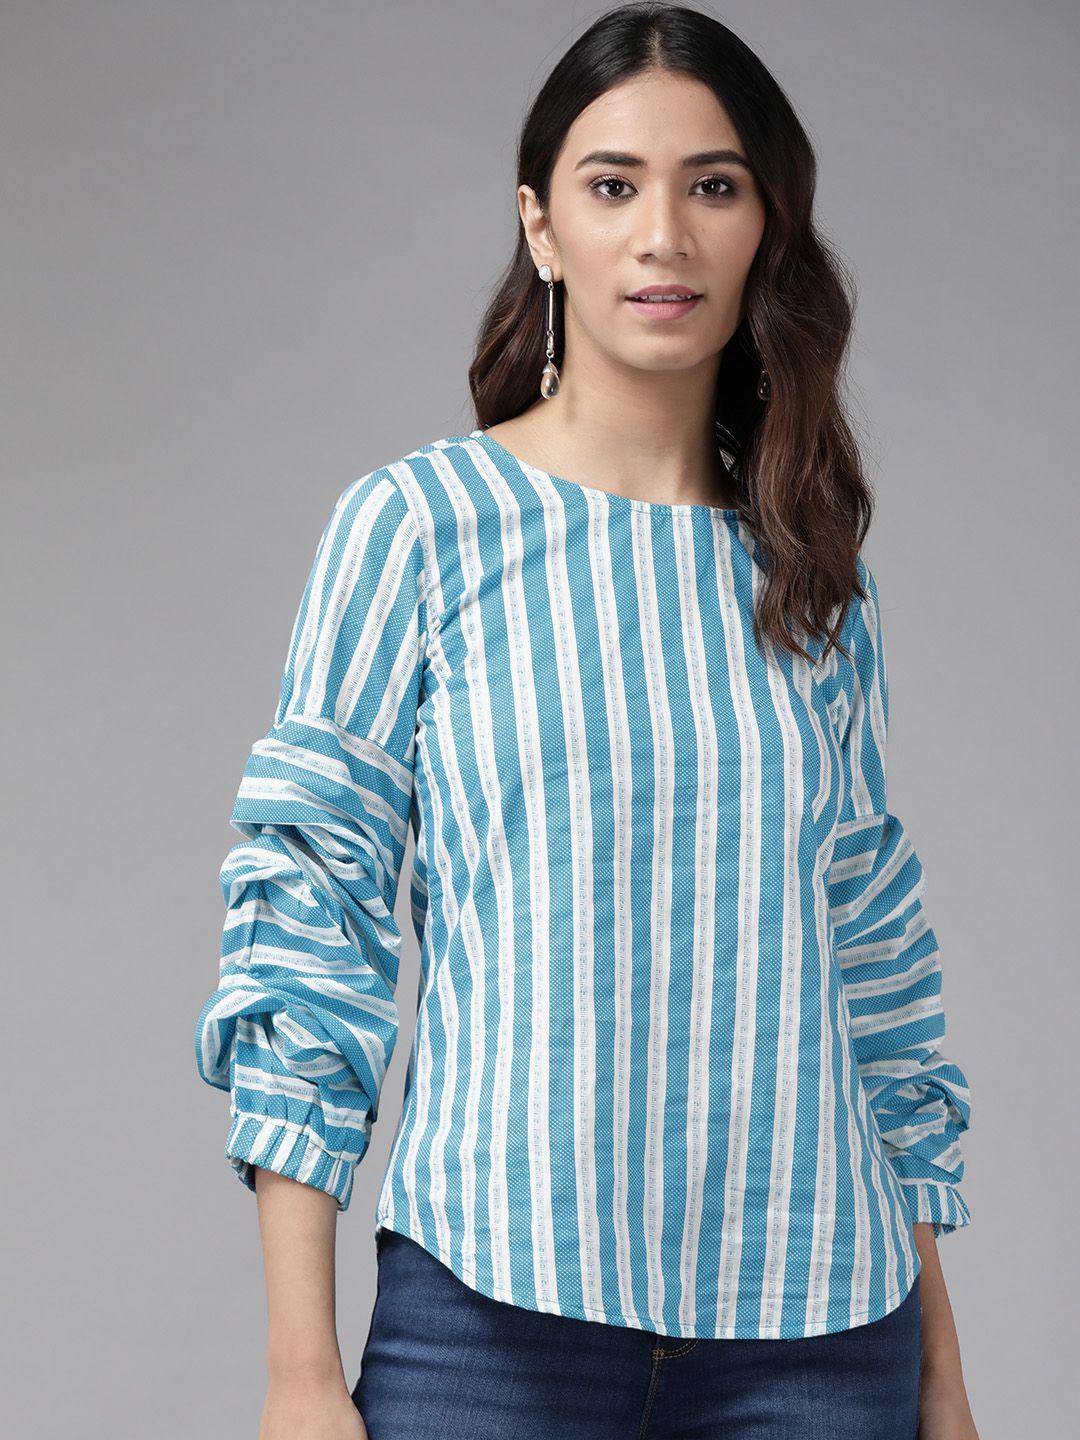 yash gallery blue & white striped regular top